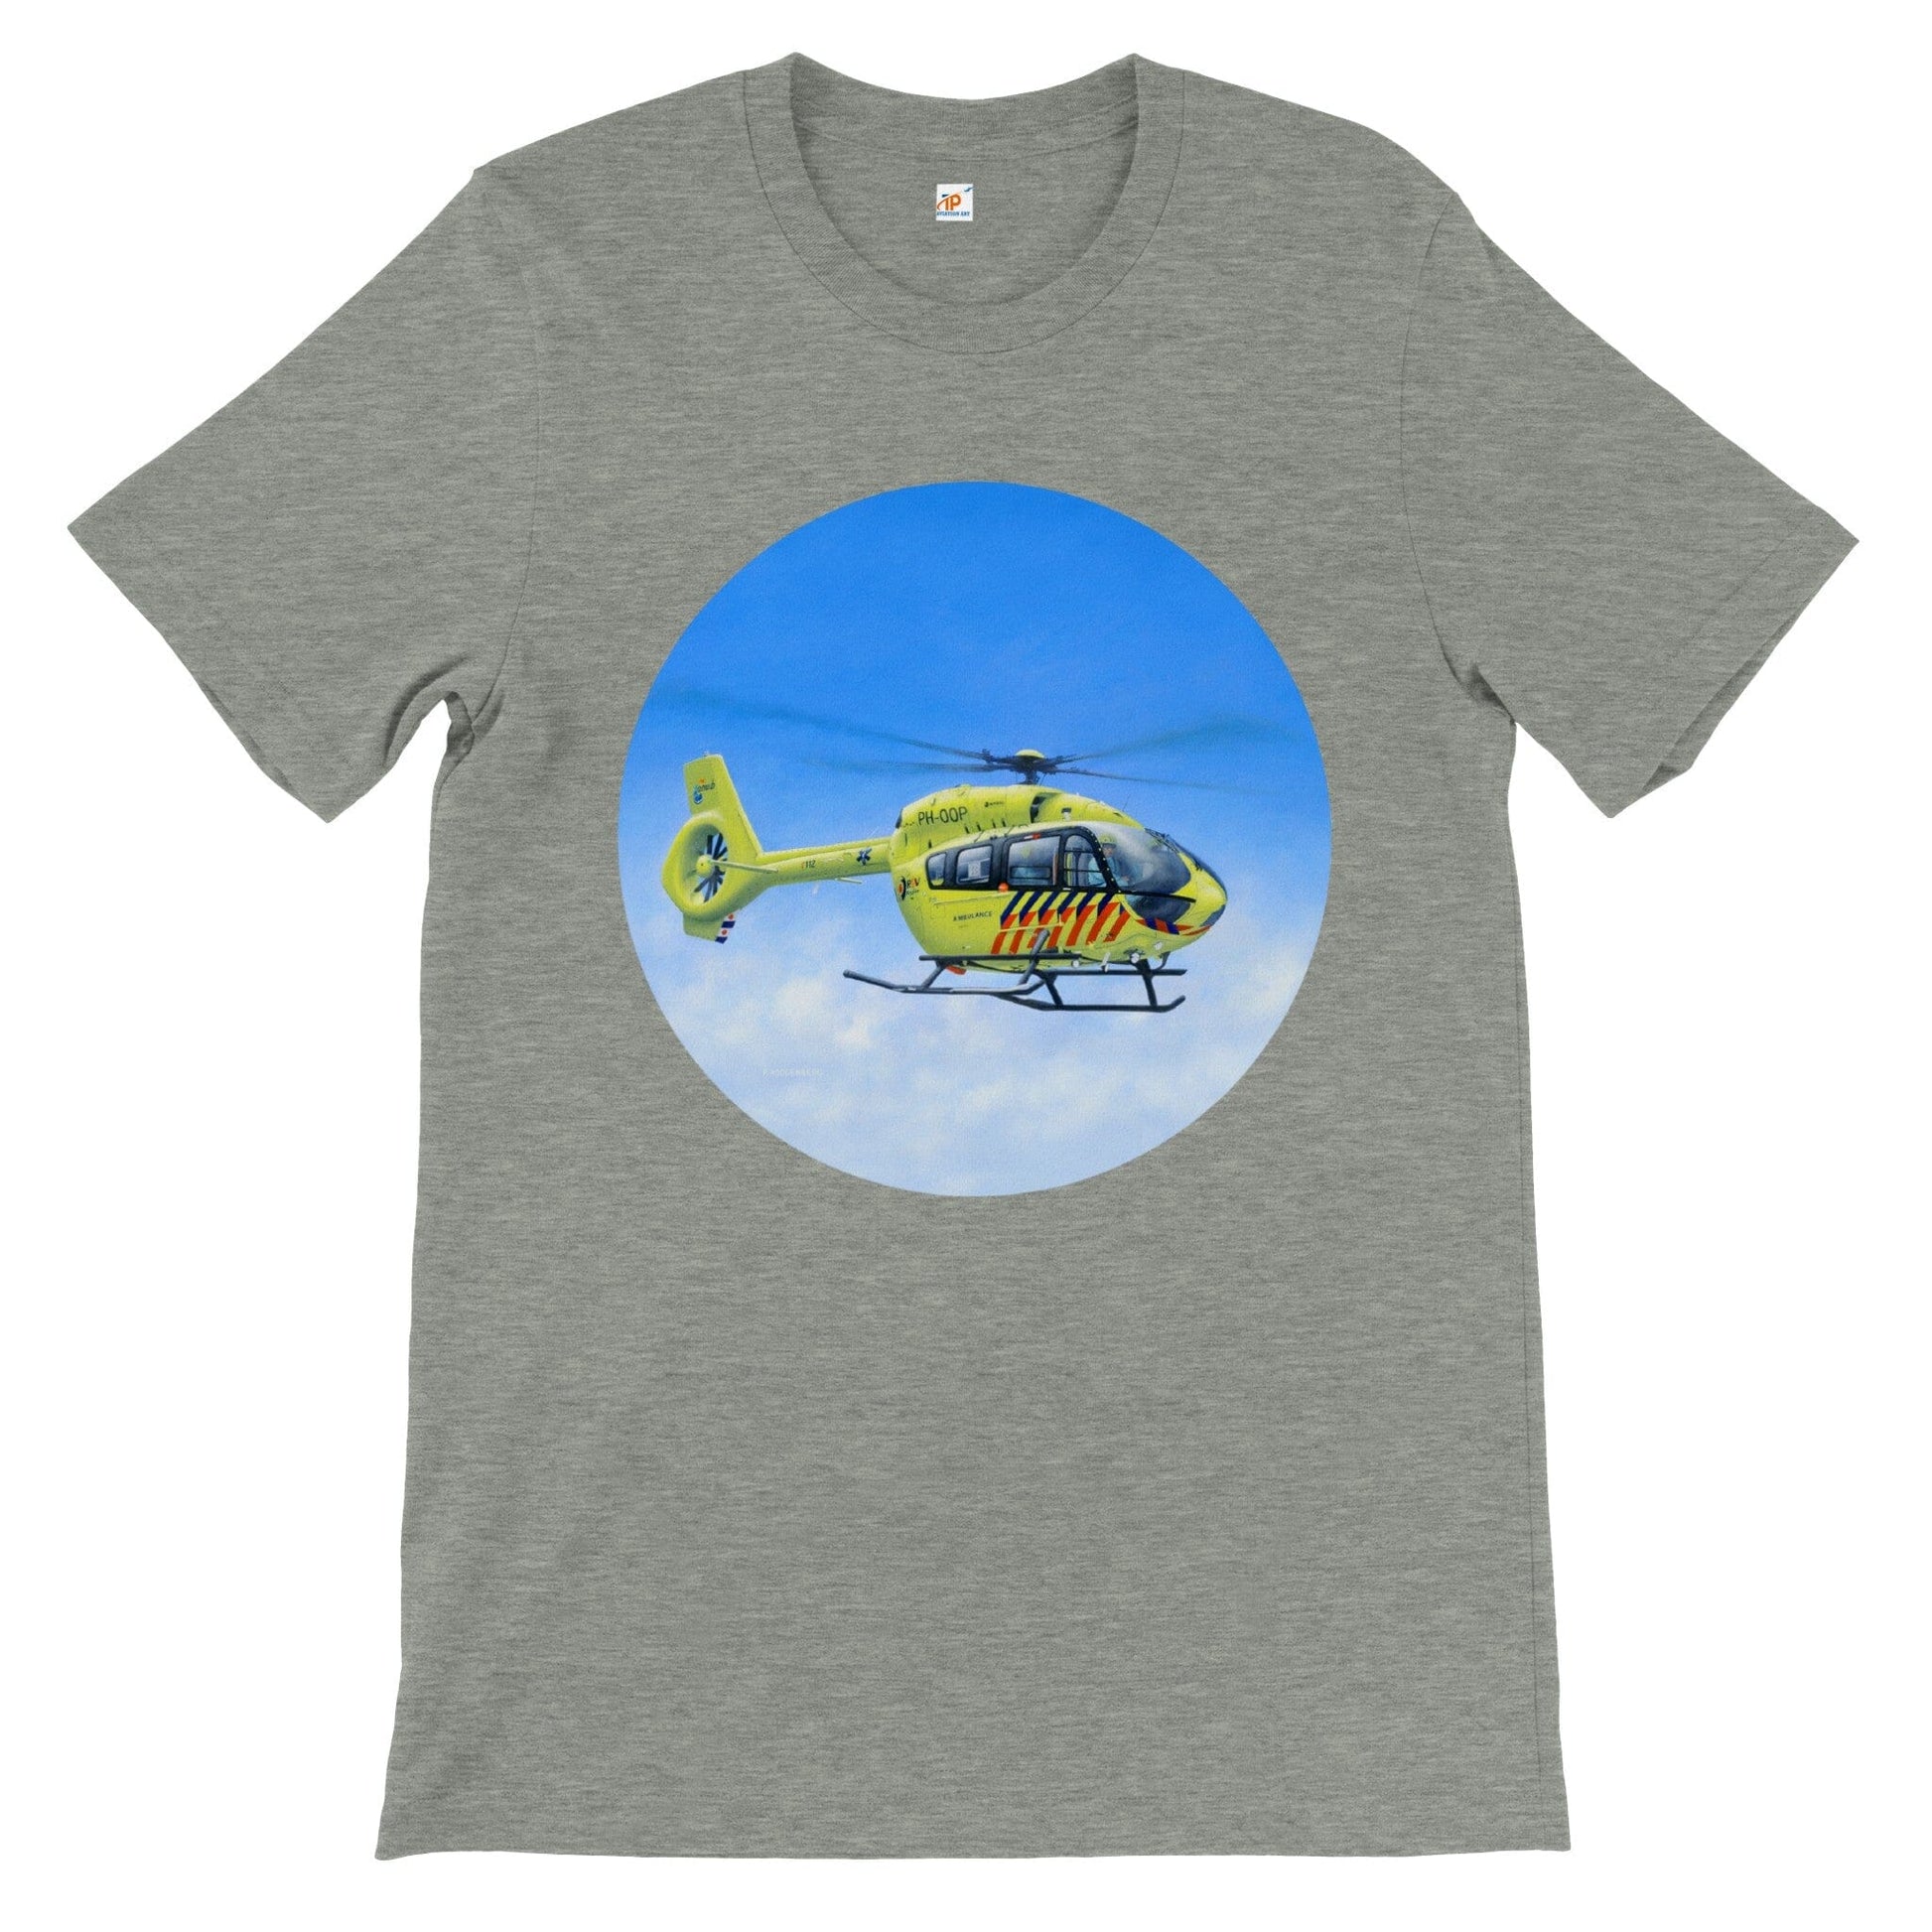 Peter Hoogenberg - T-shirt - Ambulance Helicopter Wadden Islands - Premium Unisex T-shirt TP Aviation Art Athletic Heather S 